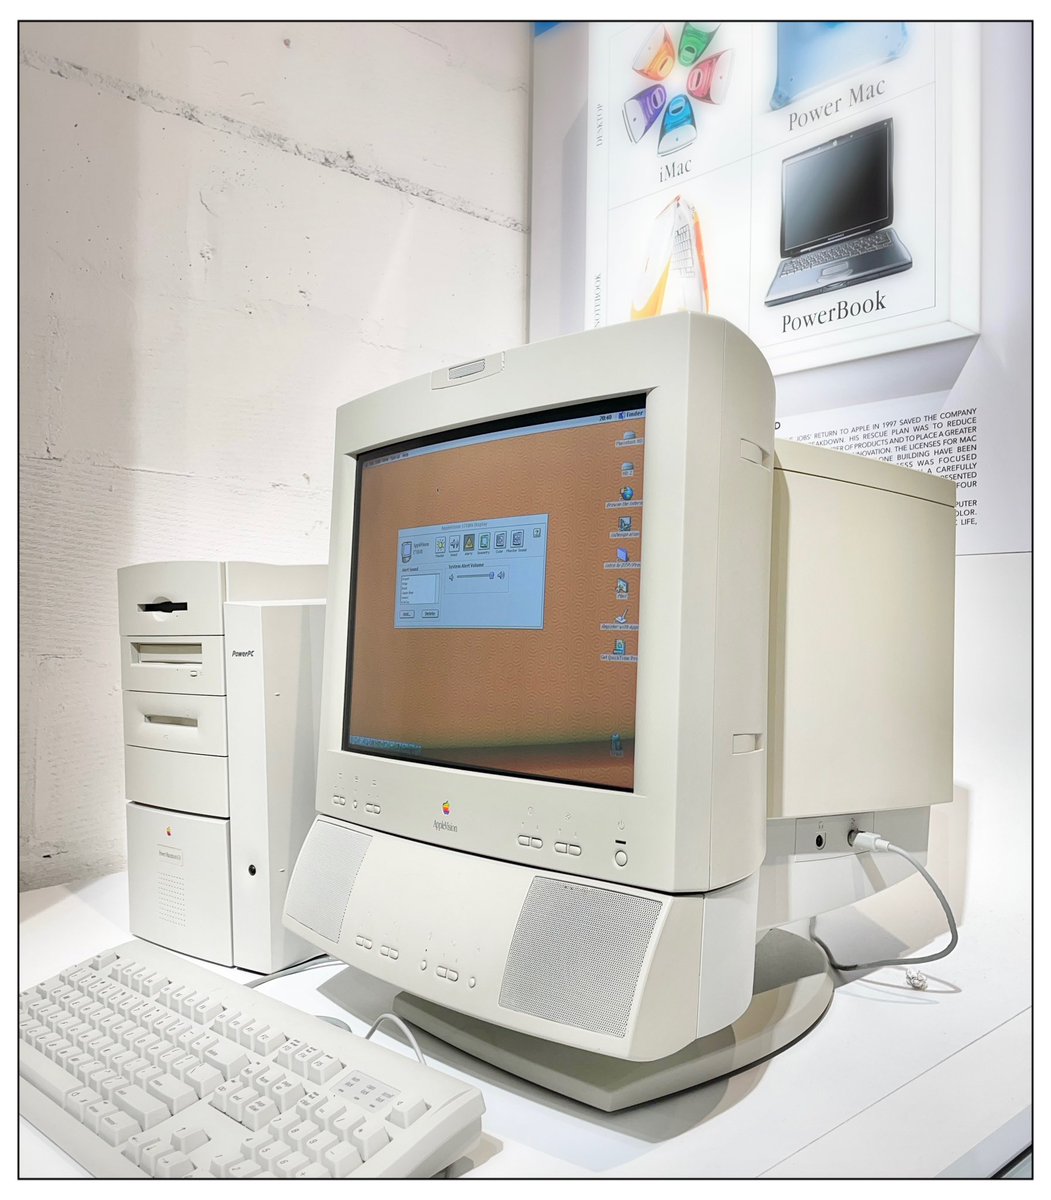 Power Mac Zone - Power Macintosh G3 Minitower with AppleVision 750 AV Display (1997) #MARCHintosh